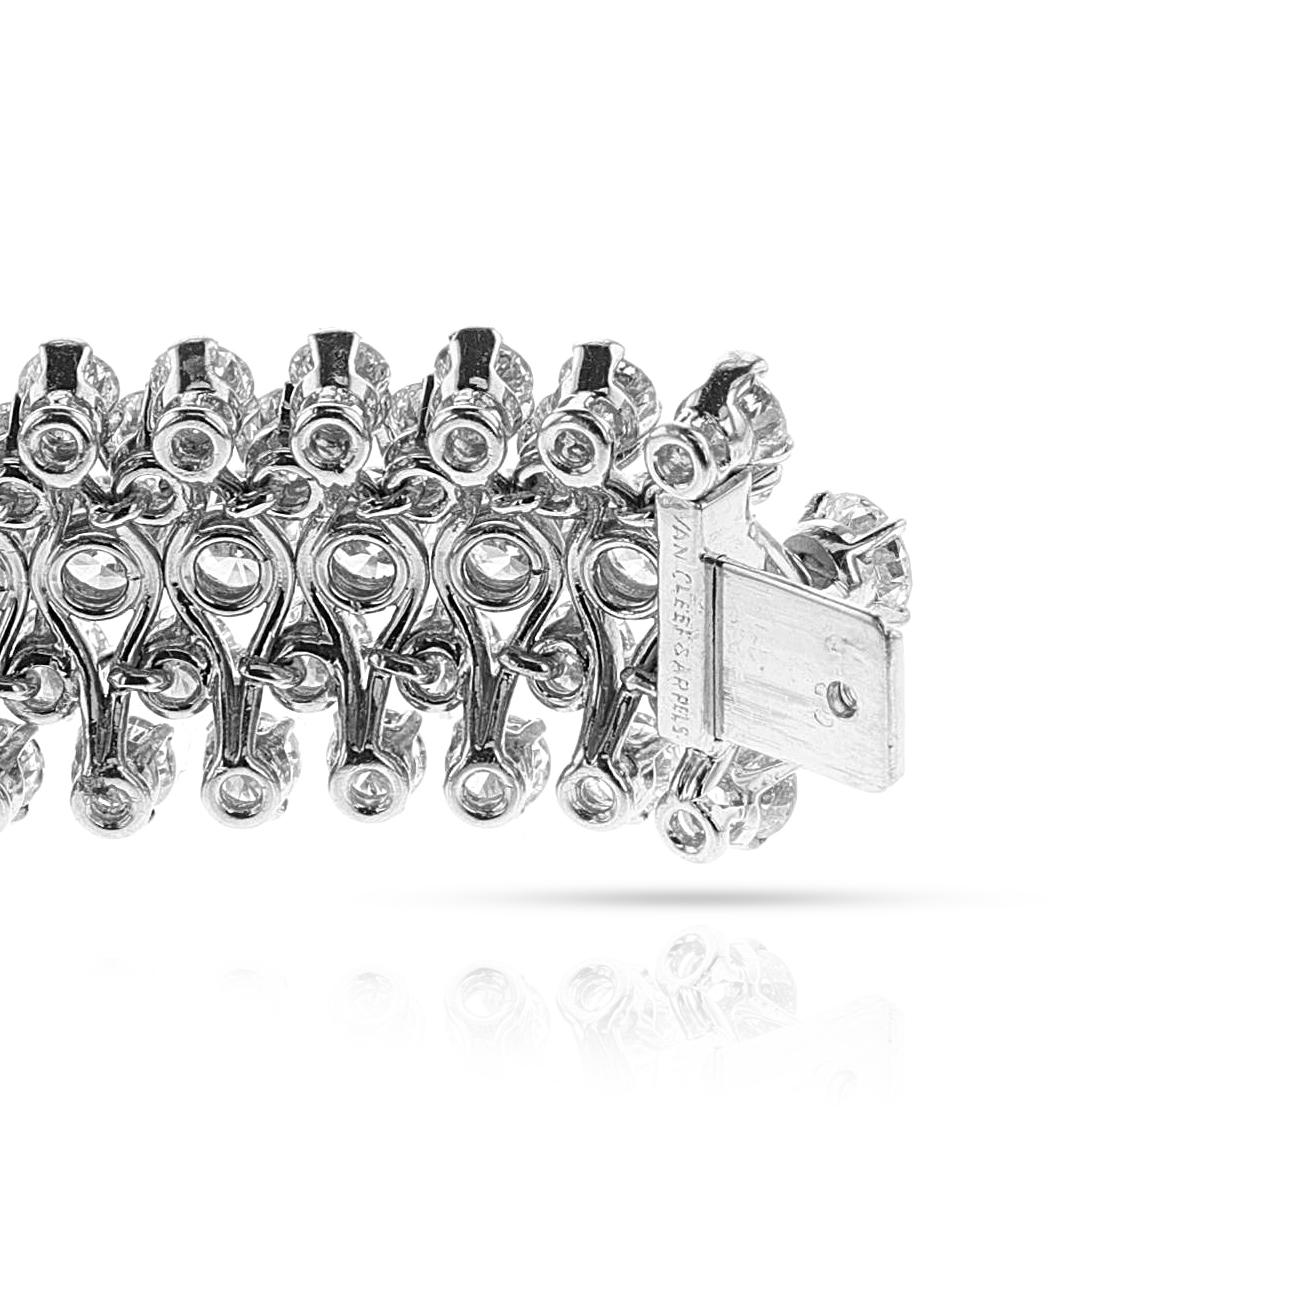 Van Cleef & Arpels Five Row Diamond Bracelet, Platinum and 18k For Sale 3